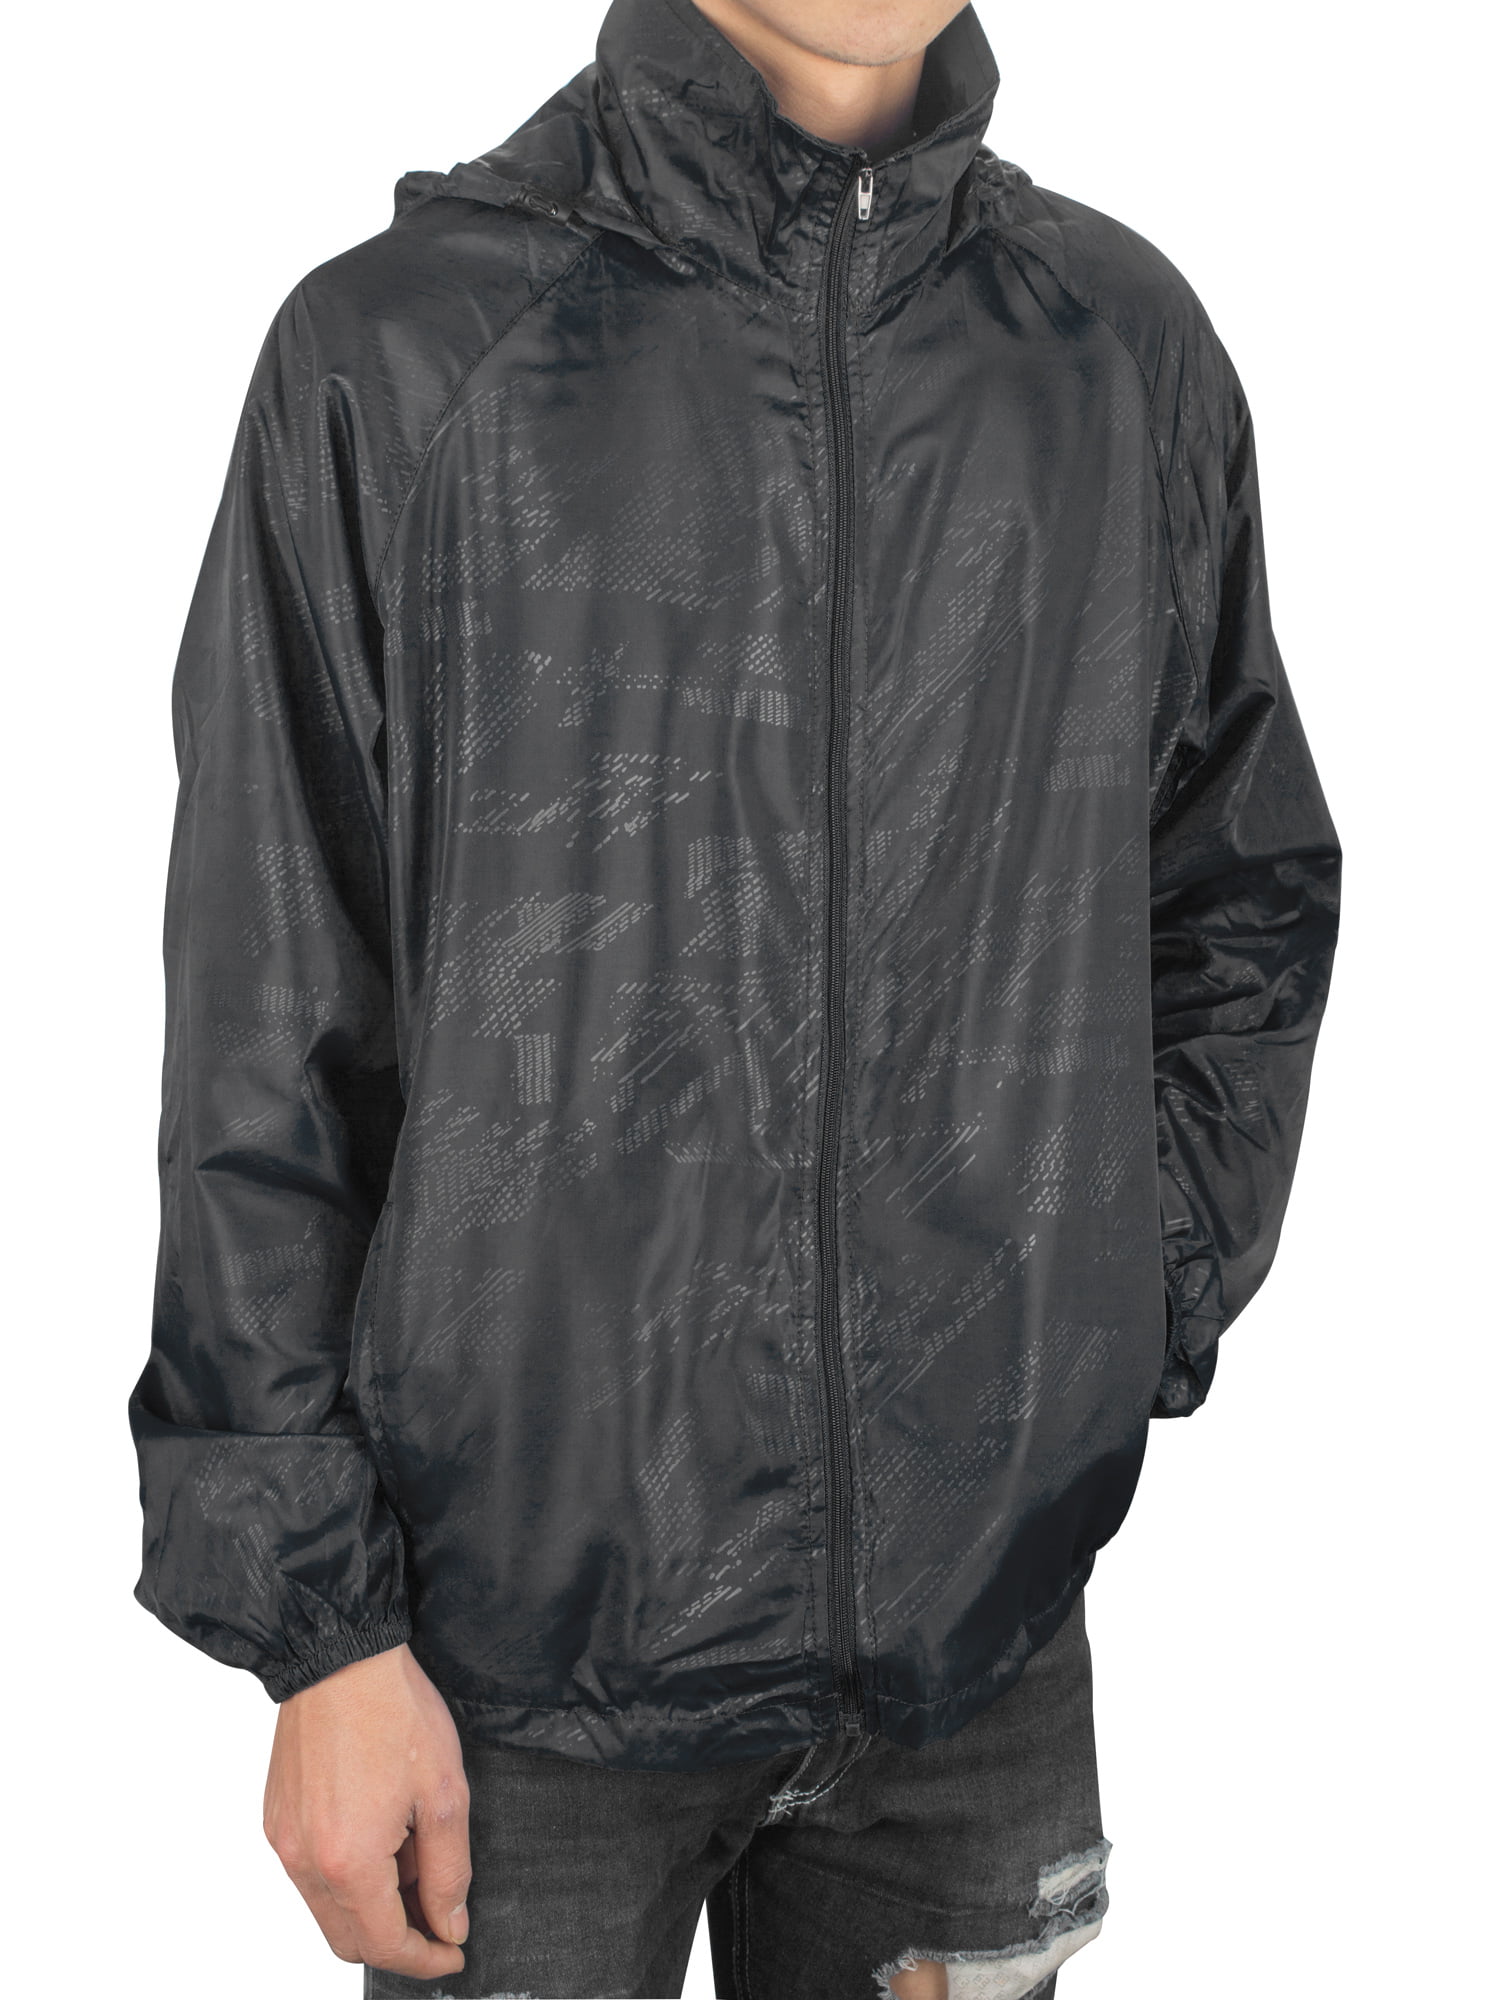 Men/'s Women/'s Lightweight Jacket UV Protect+Quick Dry Sports Windproof Skin Coat